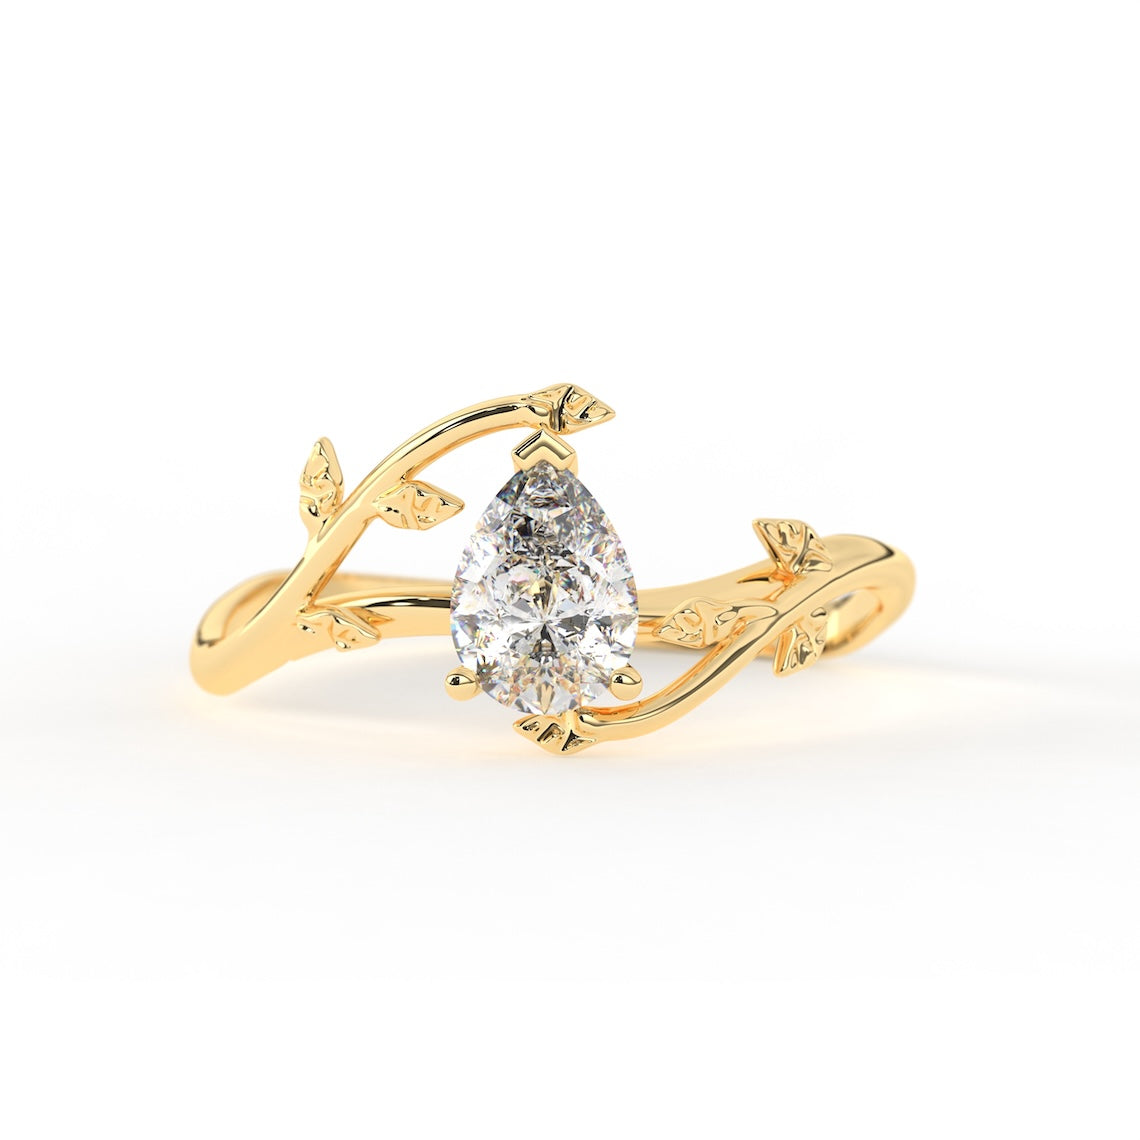 Pear Cut Diamond Ring 14K Gold